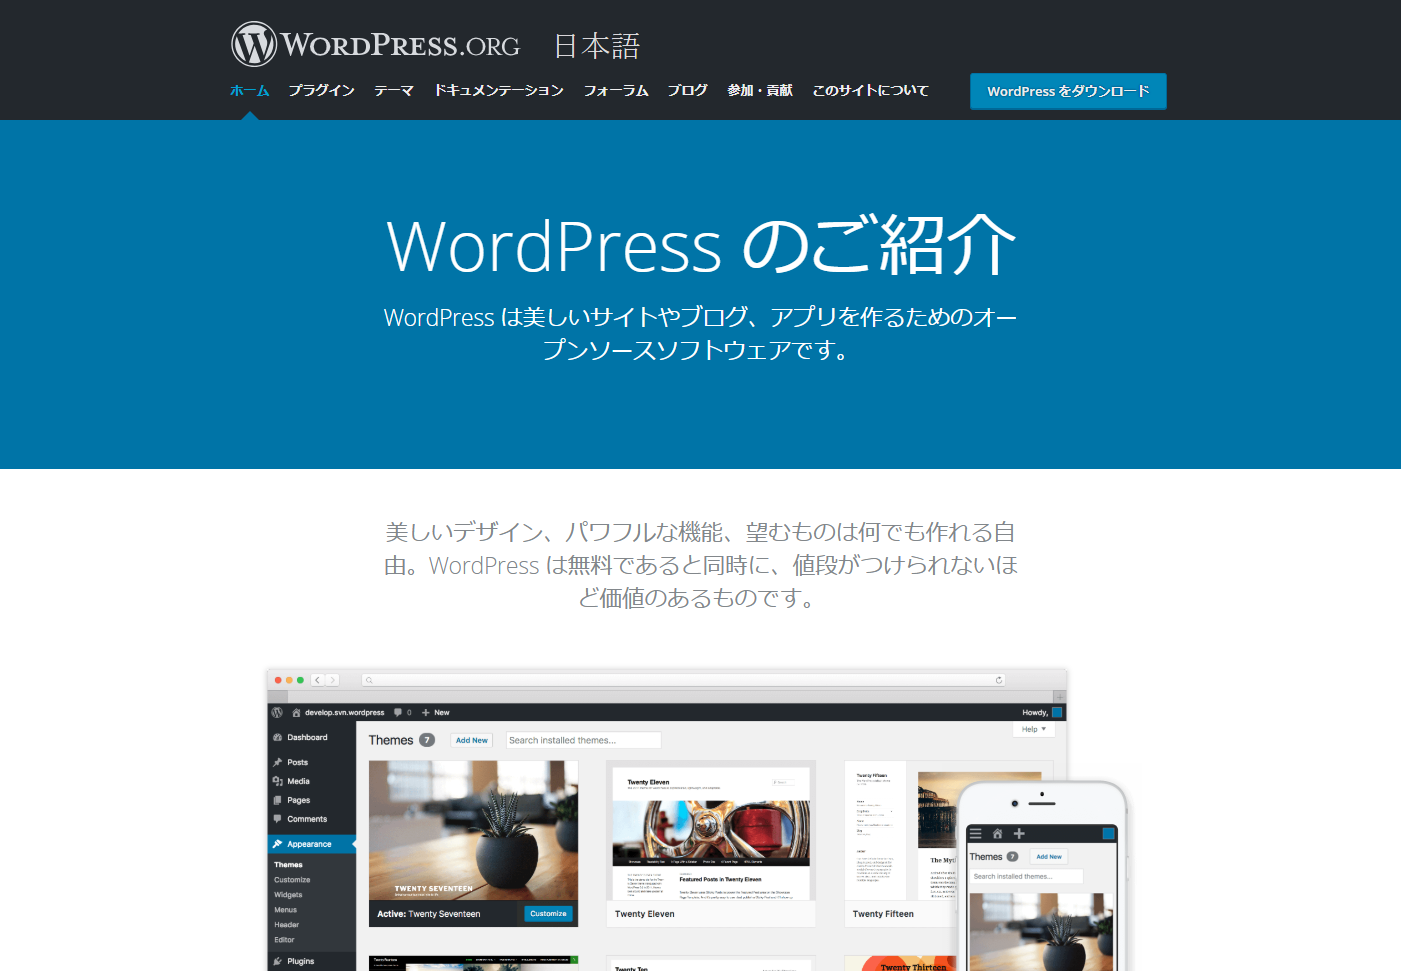 FireShot Capture 5 - 日本語 — WordPress - https___ja.wordpress.org_.png